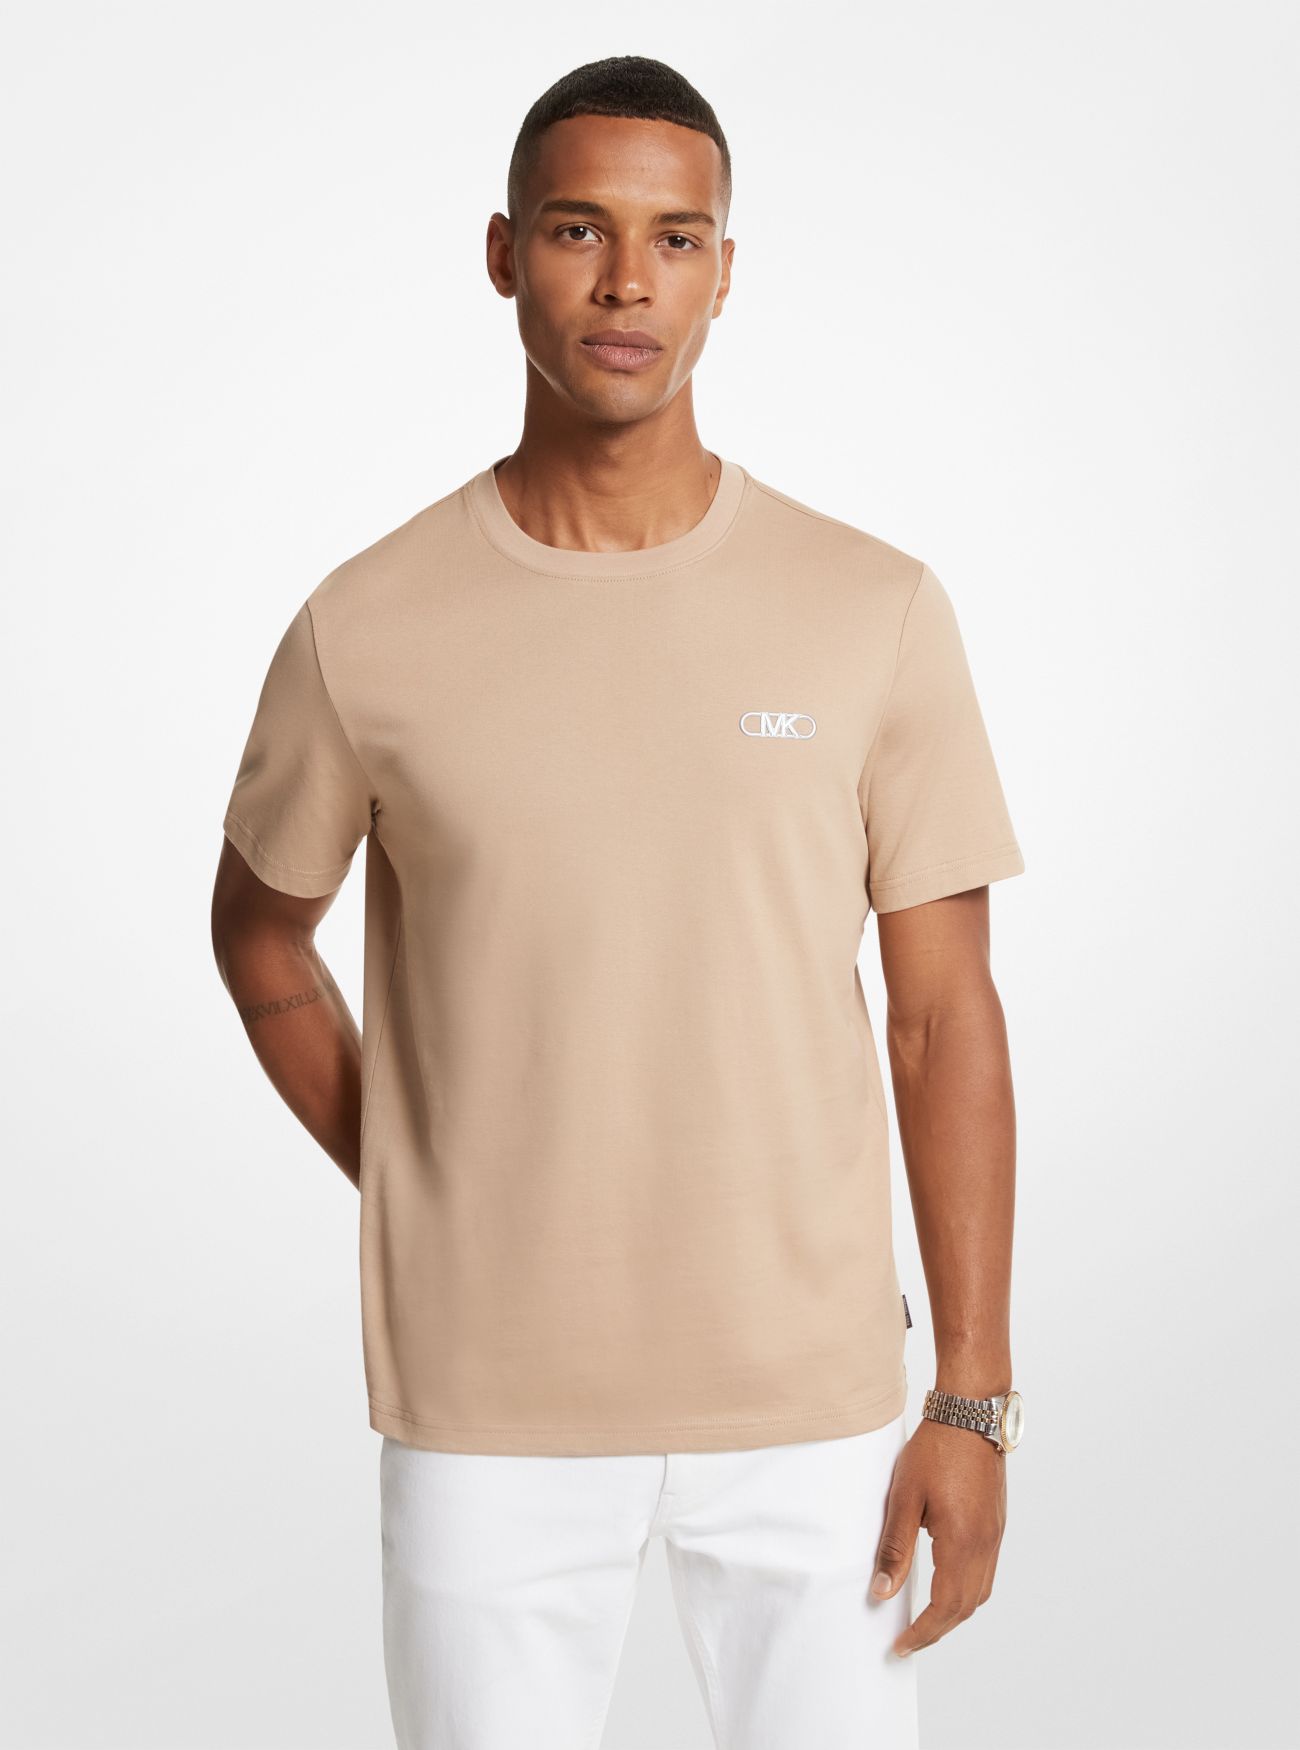 MK Empire Logo Cotton T-Shirt - Natural - Michael Kors